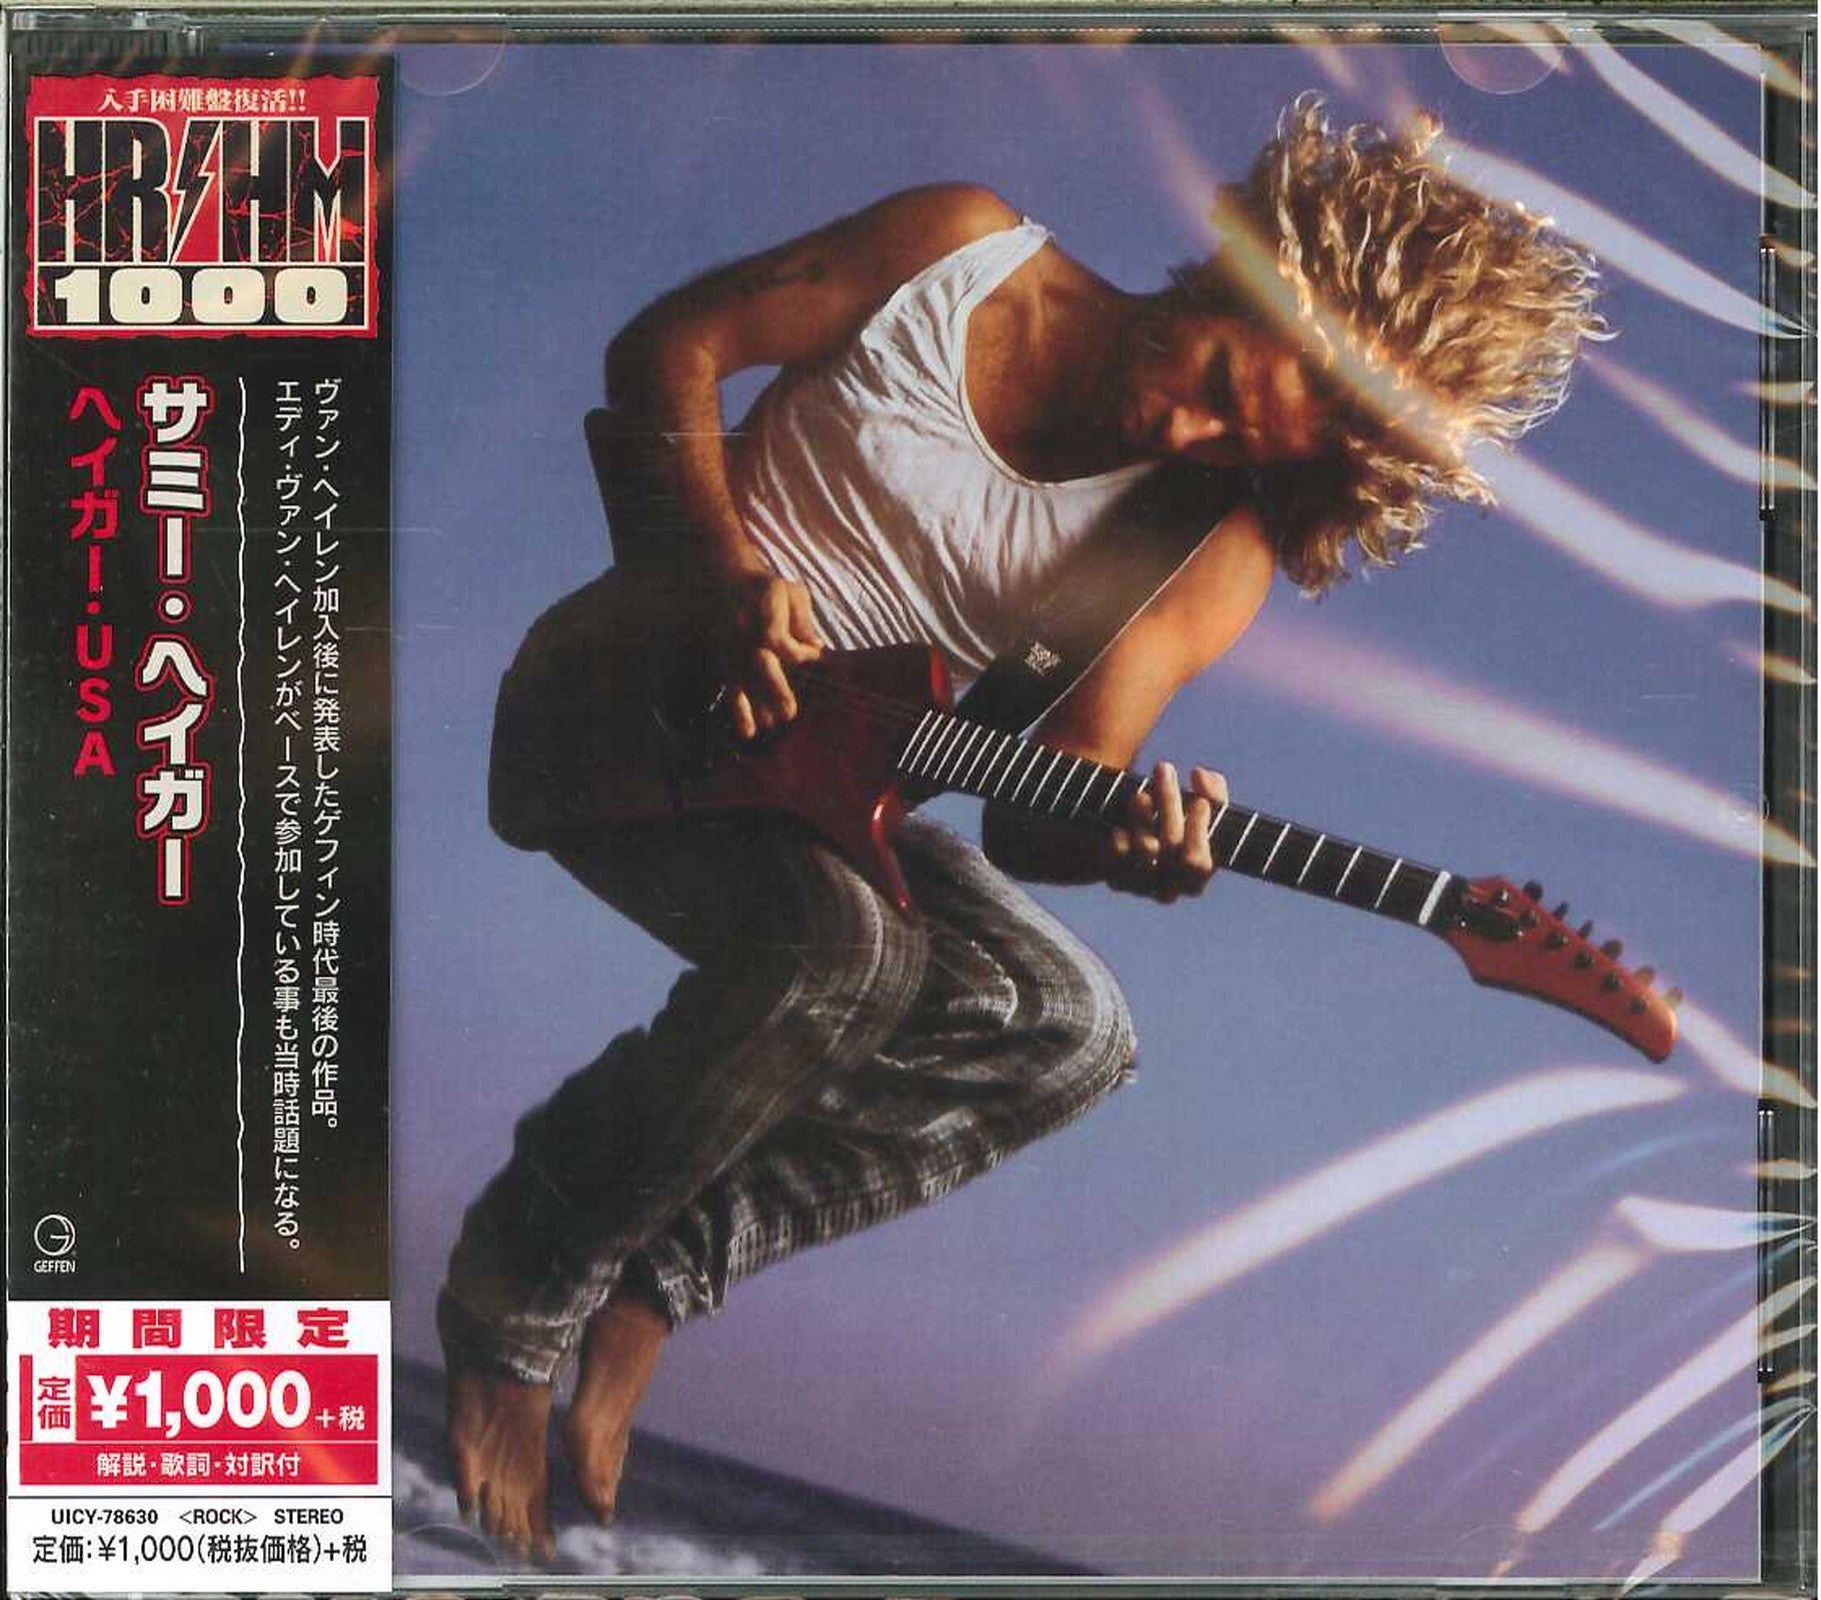 Sammy Hagar - I Never Said Goodbye - Japan CD Limited Edition – CDs Vinyl  Japan Store CD